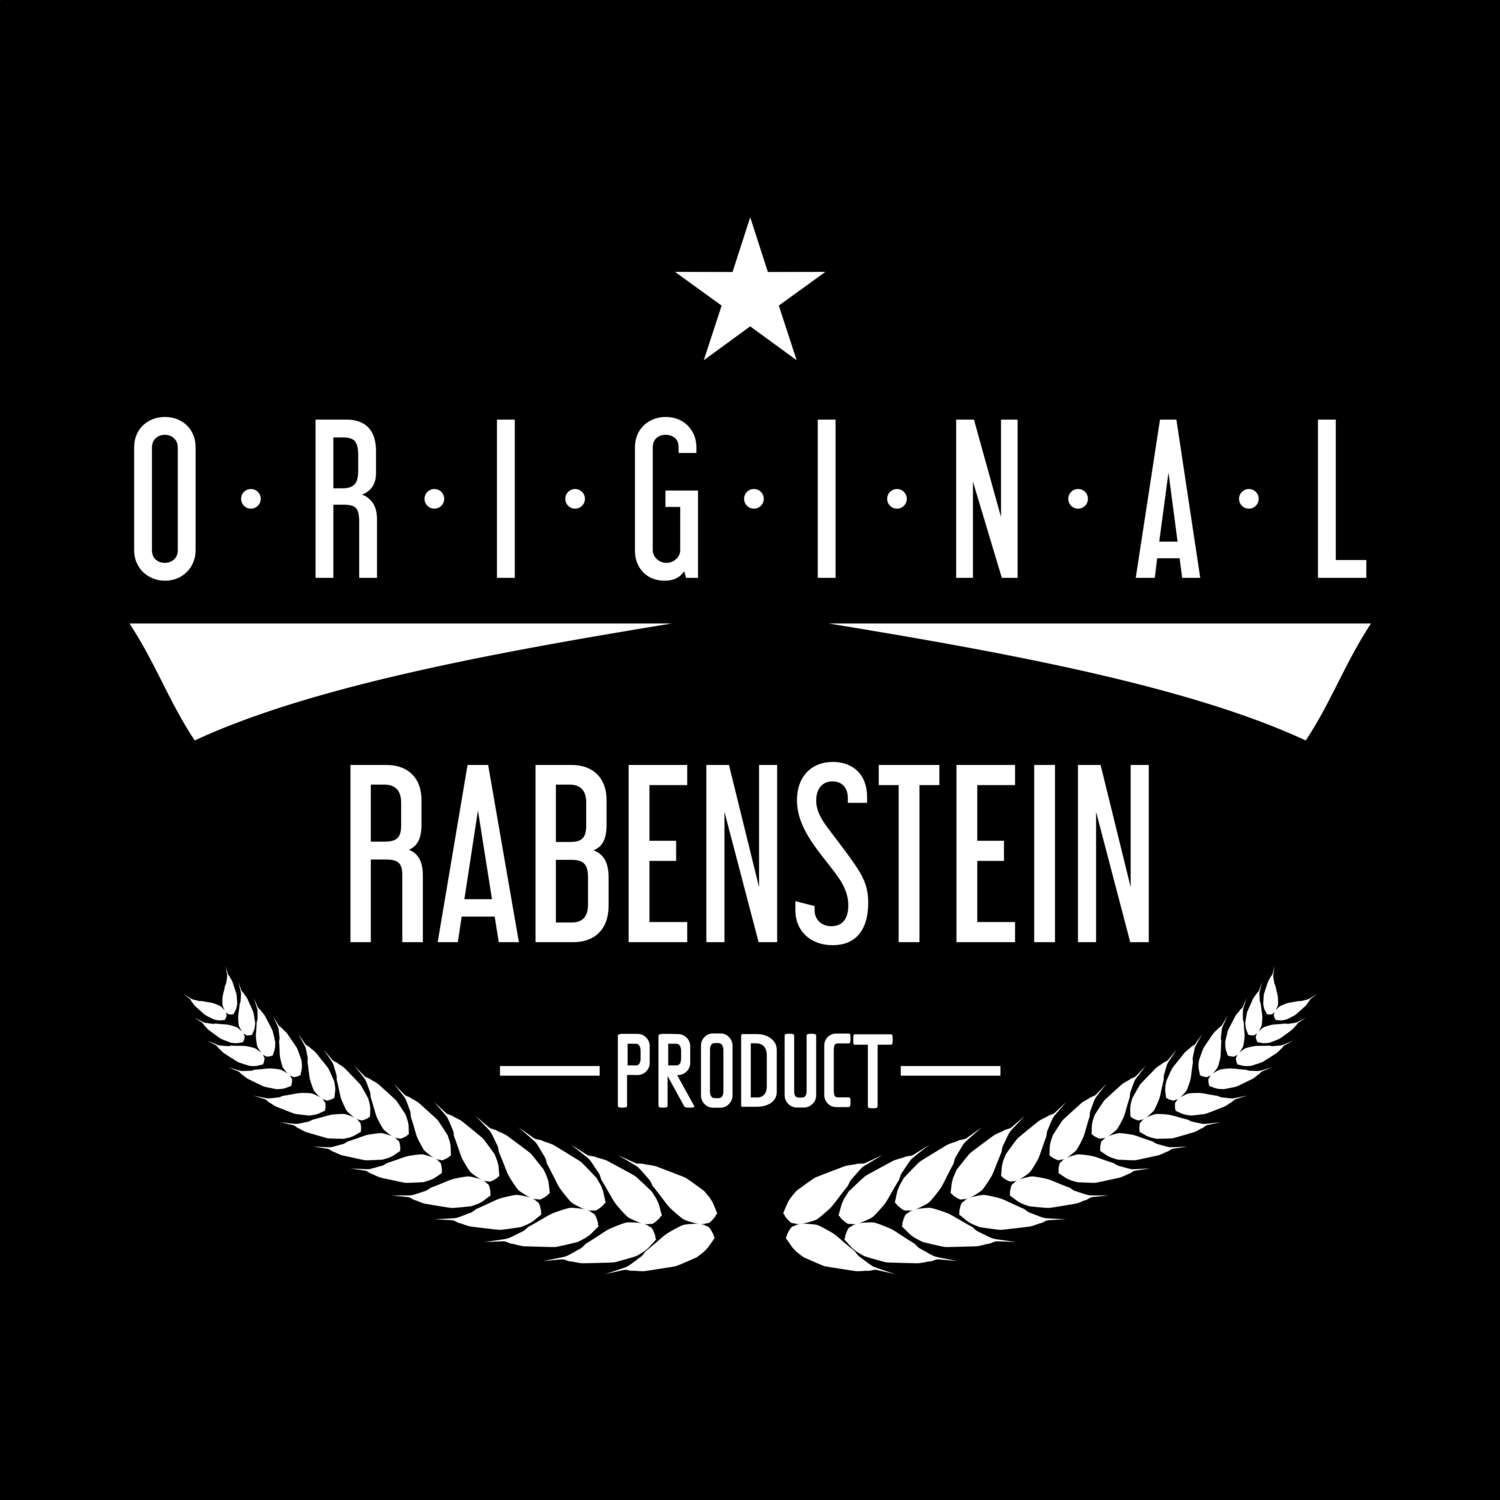 Rabenstein T-Shirt »Original Product«